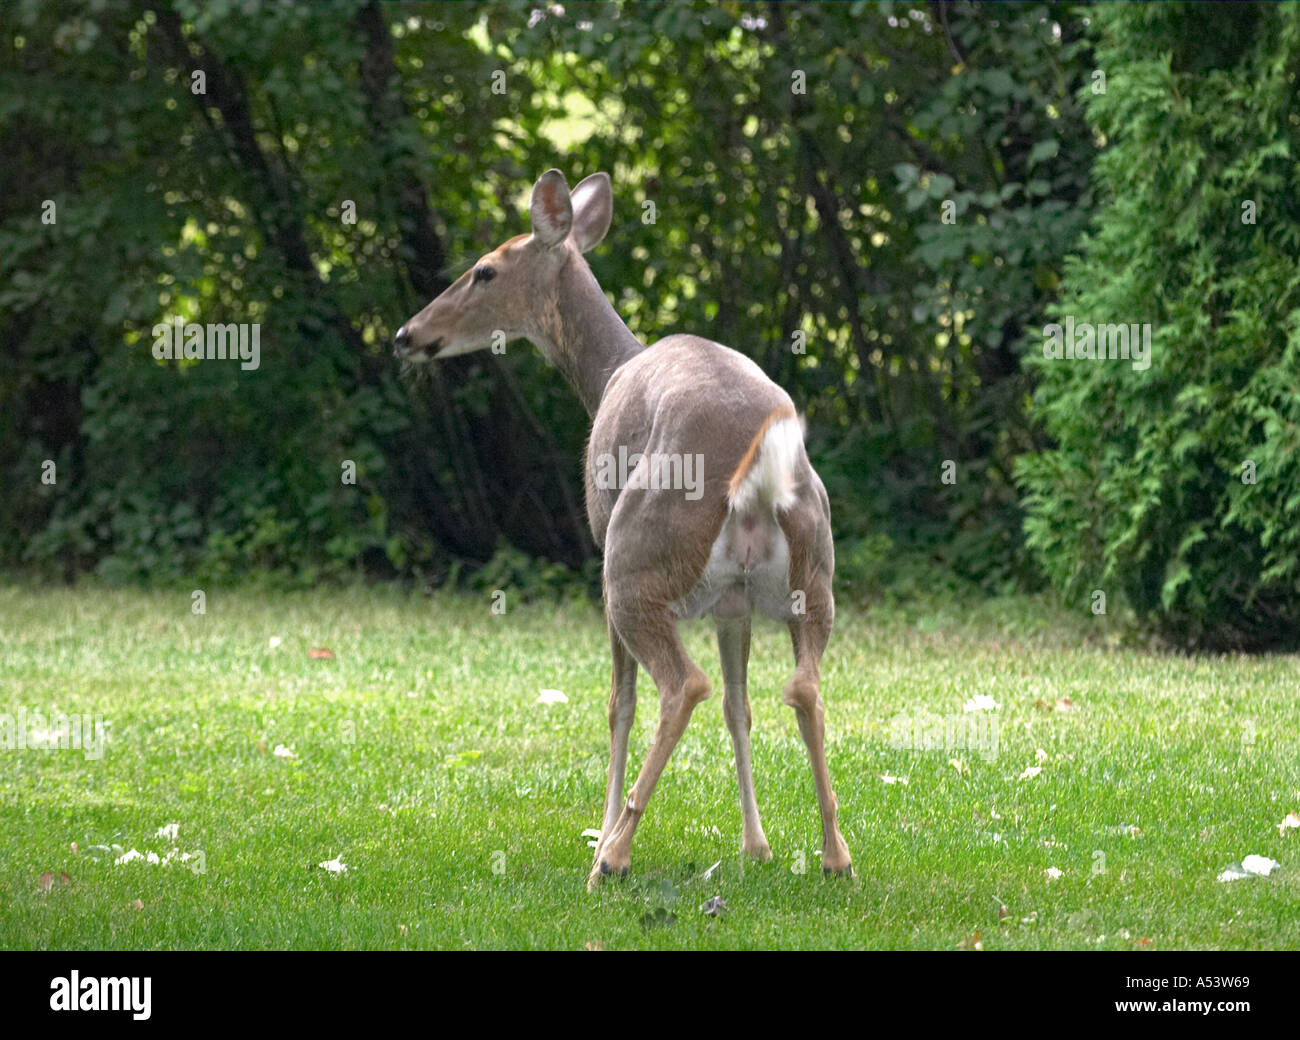 ANIMALS Riverwoods Illinois Whitetail Deer Doe Urinate In Backyard